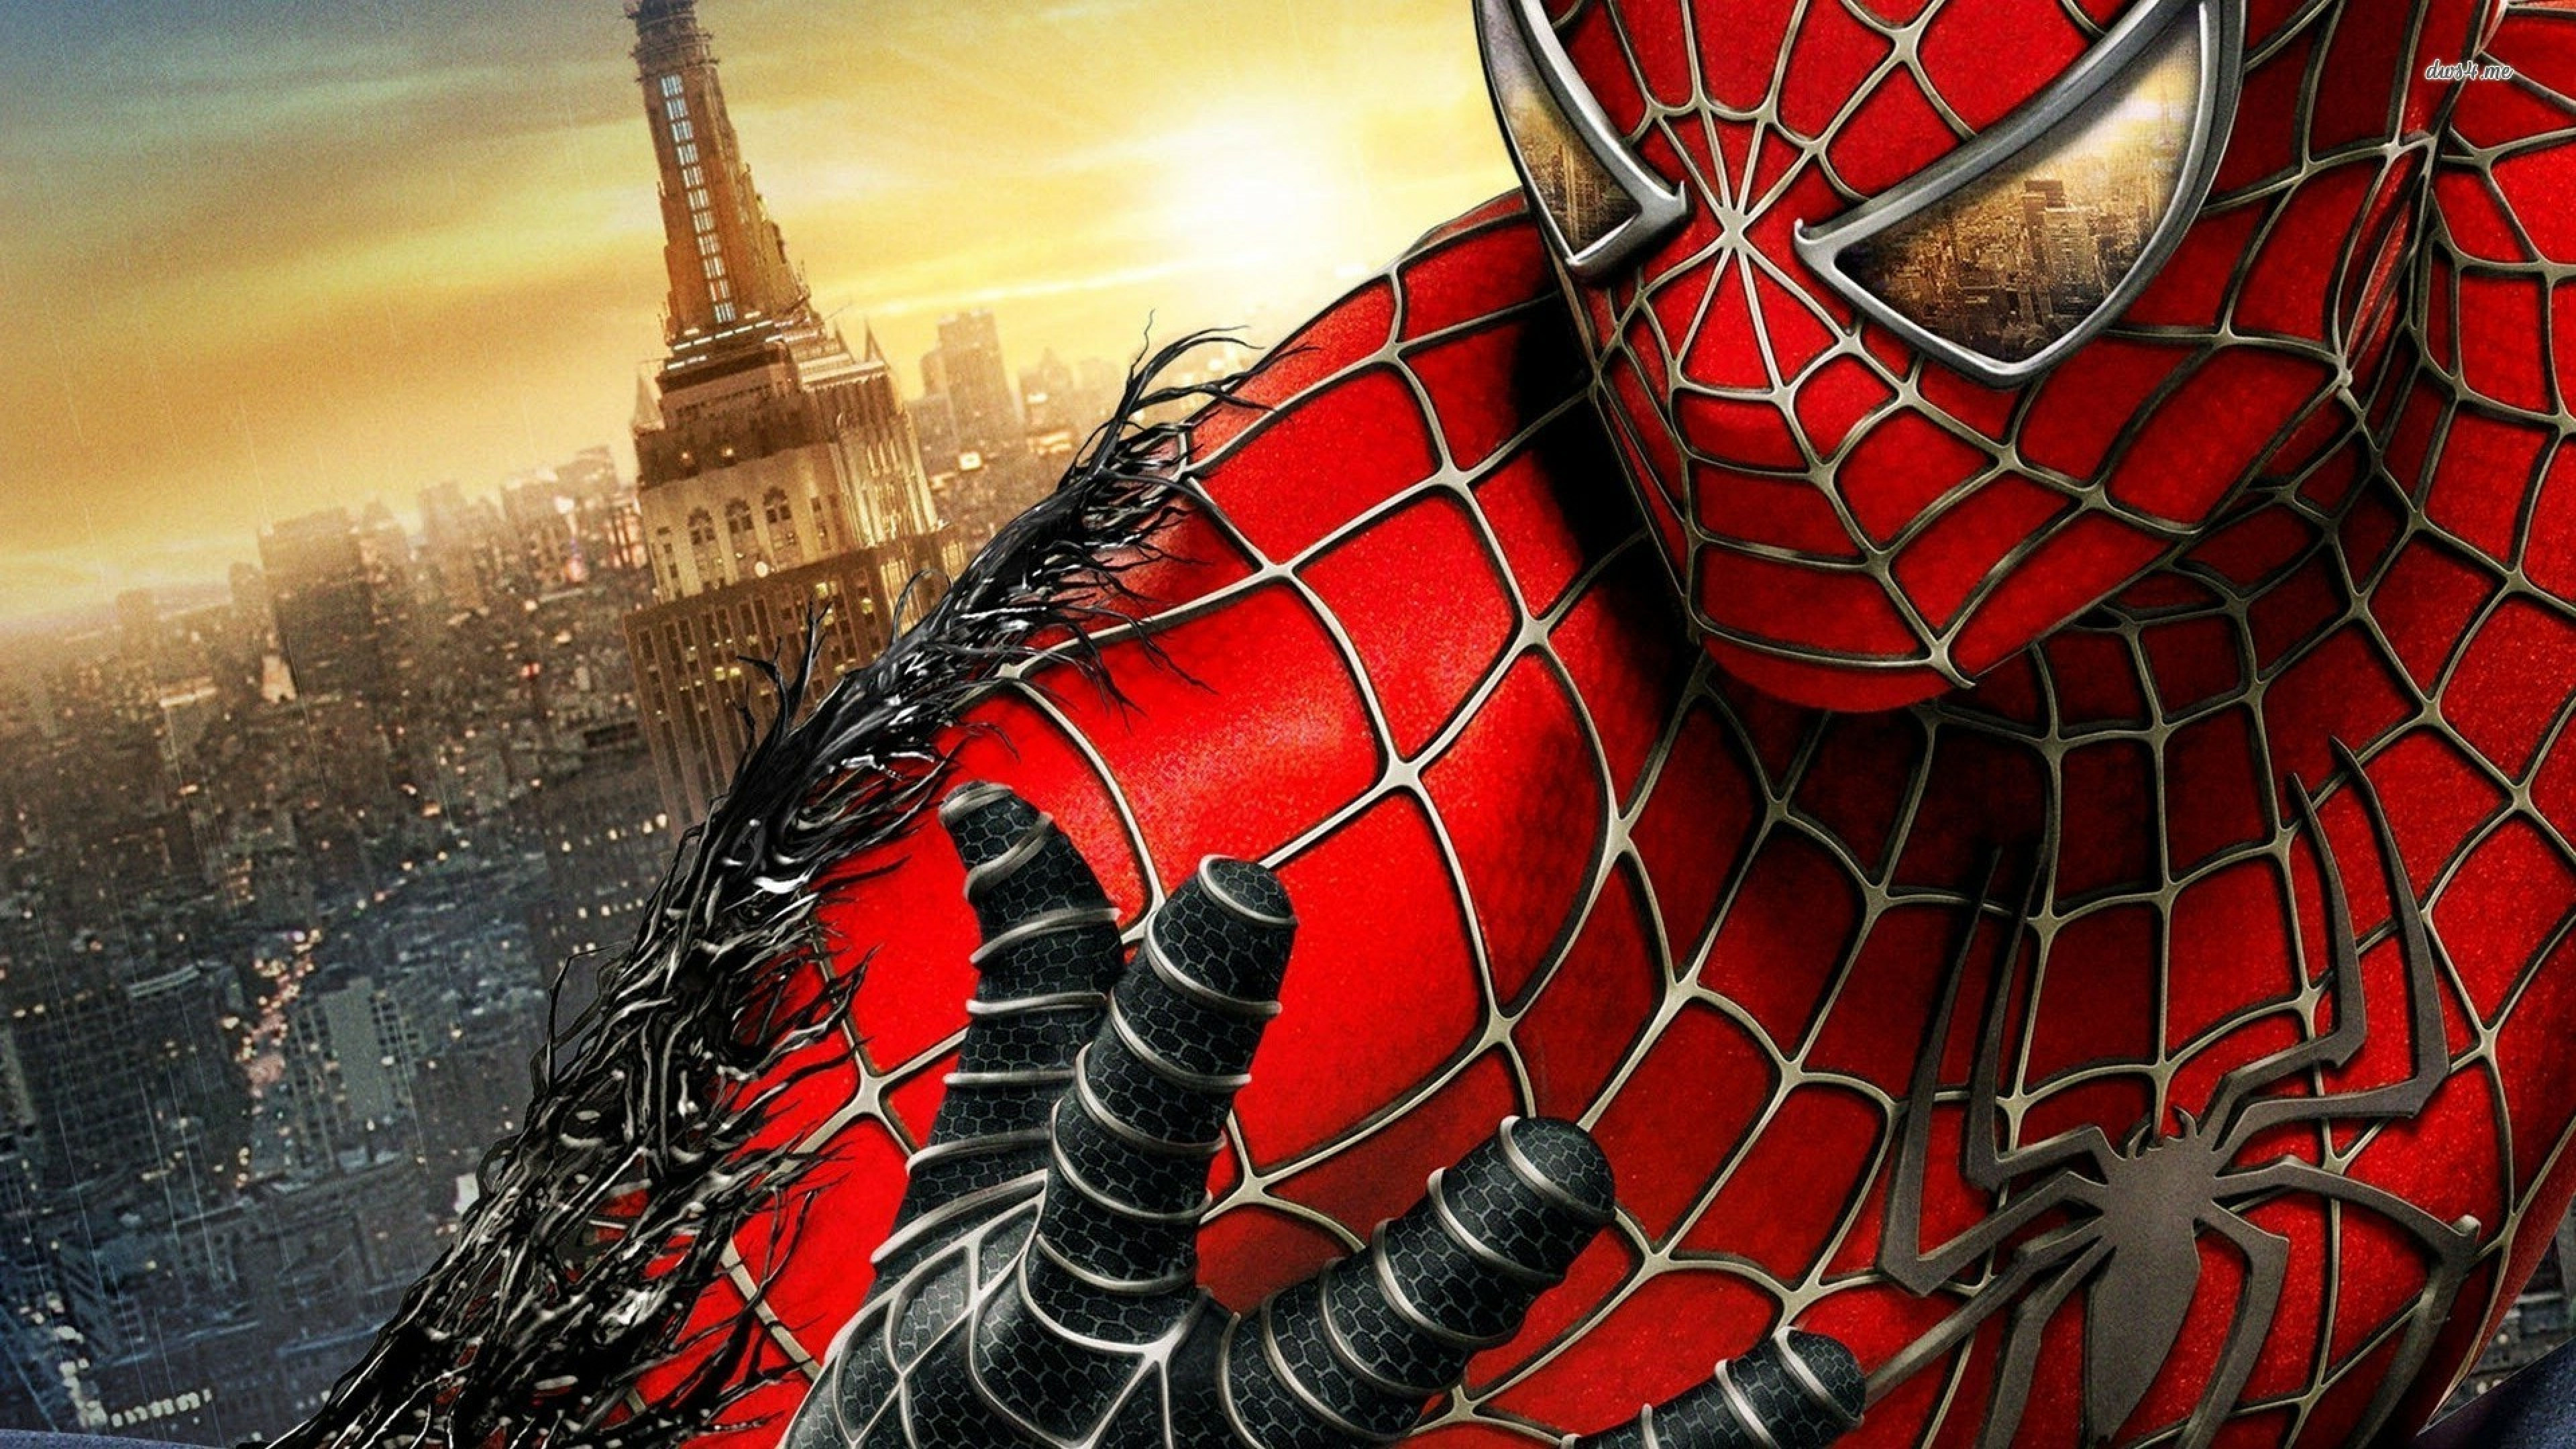 Spider-Man Homecoming 4K Ultra HD Wallpapers, HD Spider-Man Homecoming  3840x2160 Backgrounds, Free Images Download